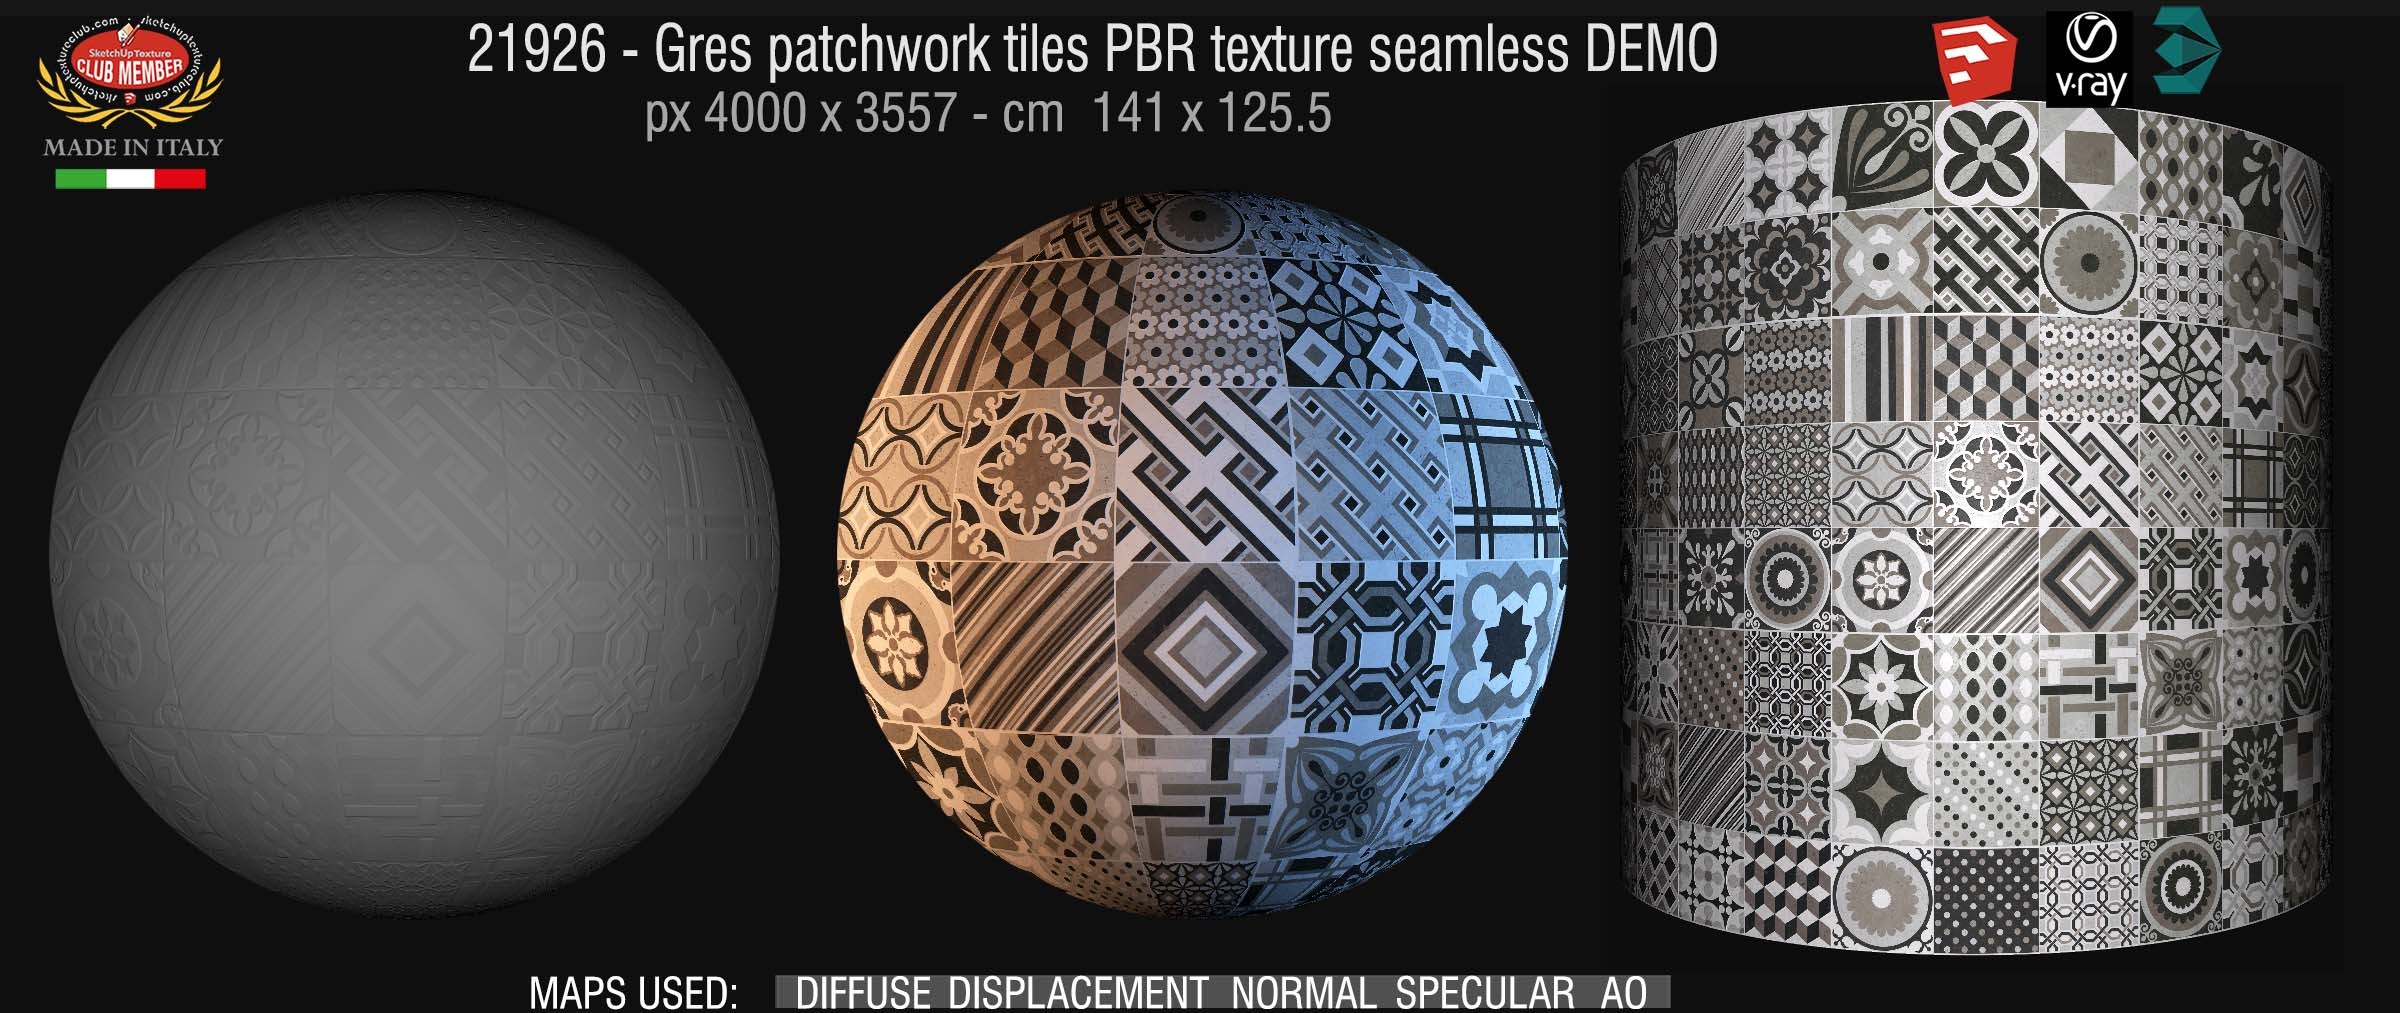 21926 gres patchwork tiles PBR texture seamless DEMO